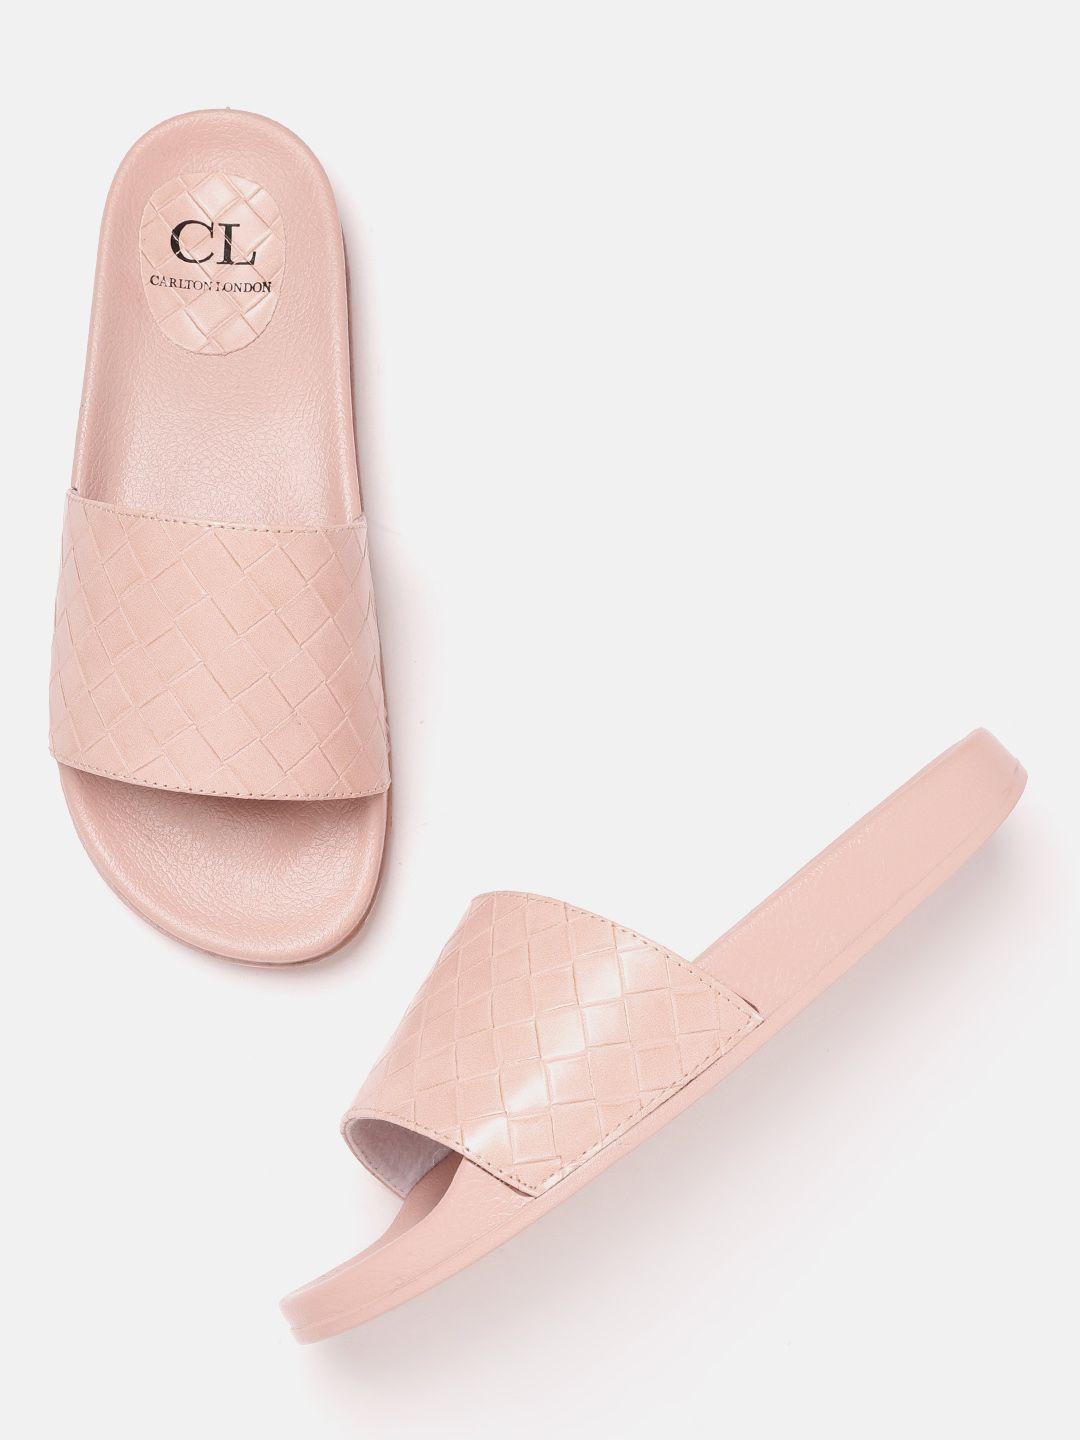 Carlton London Women Pink Basketweave Textured Open Toe Flats